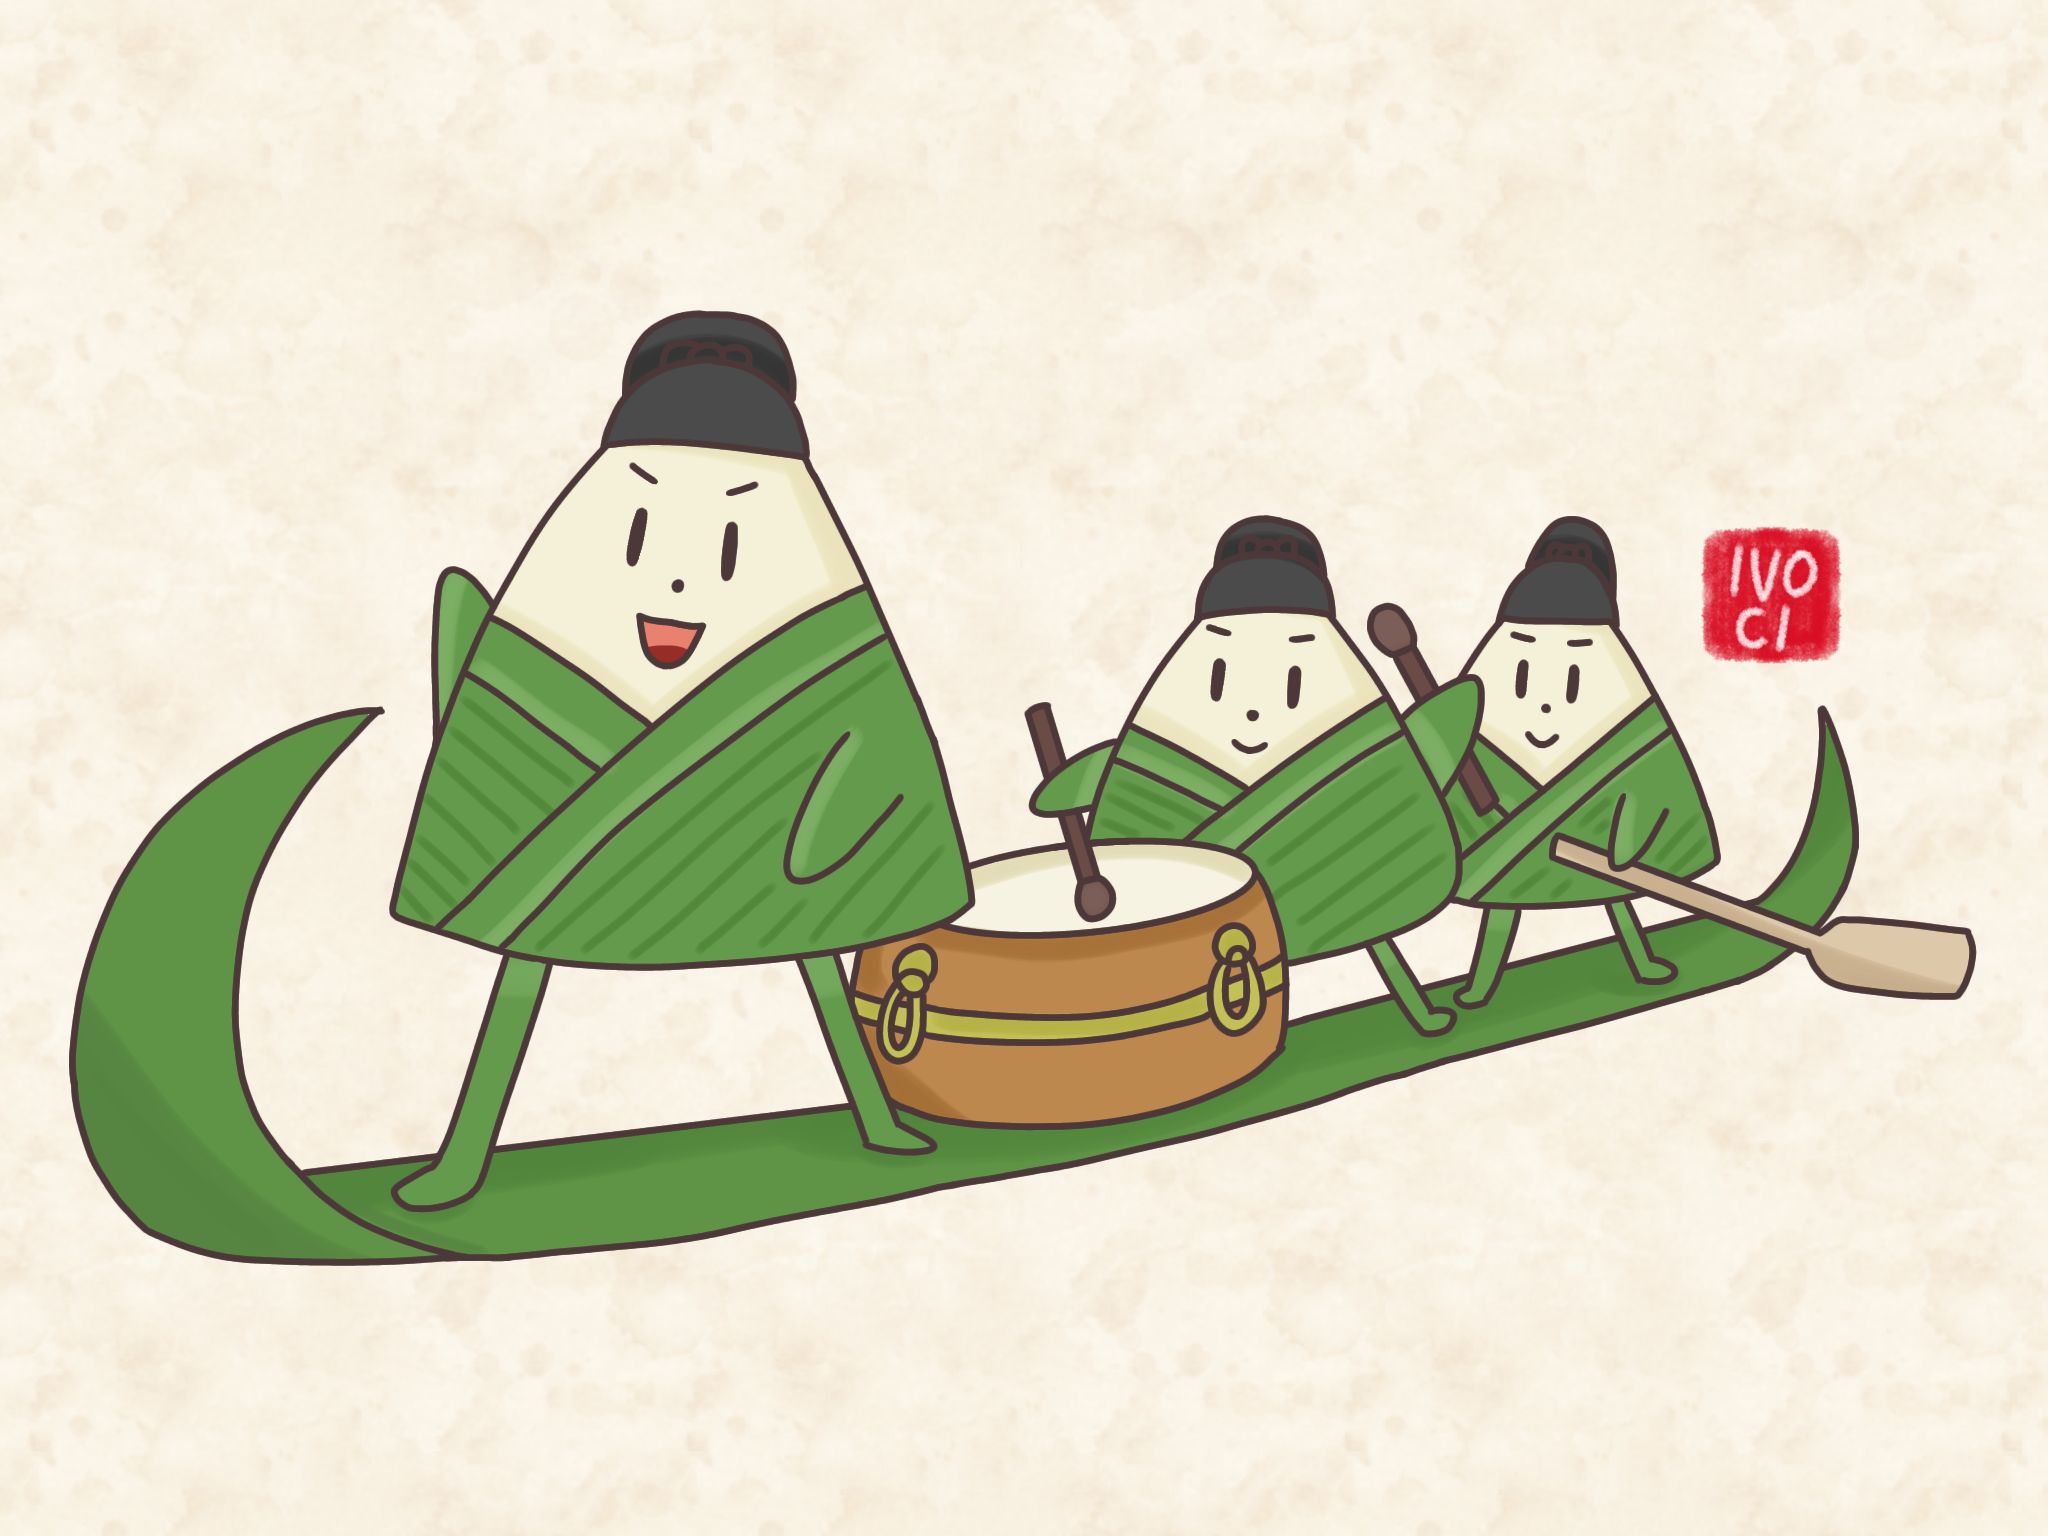 ivoci - Dragon Boat Festival 端午节 Illustration - 1